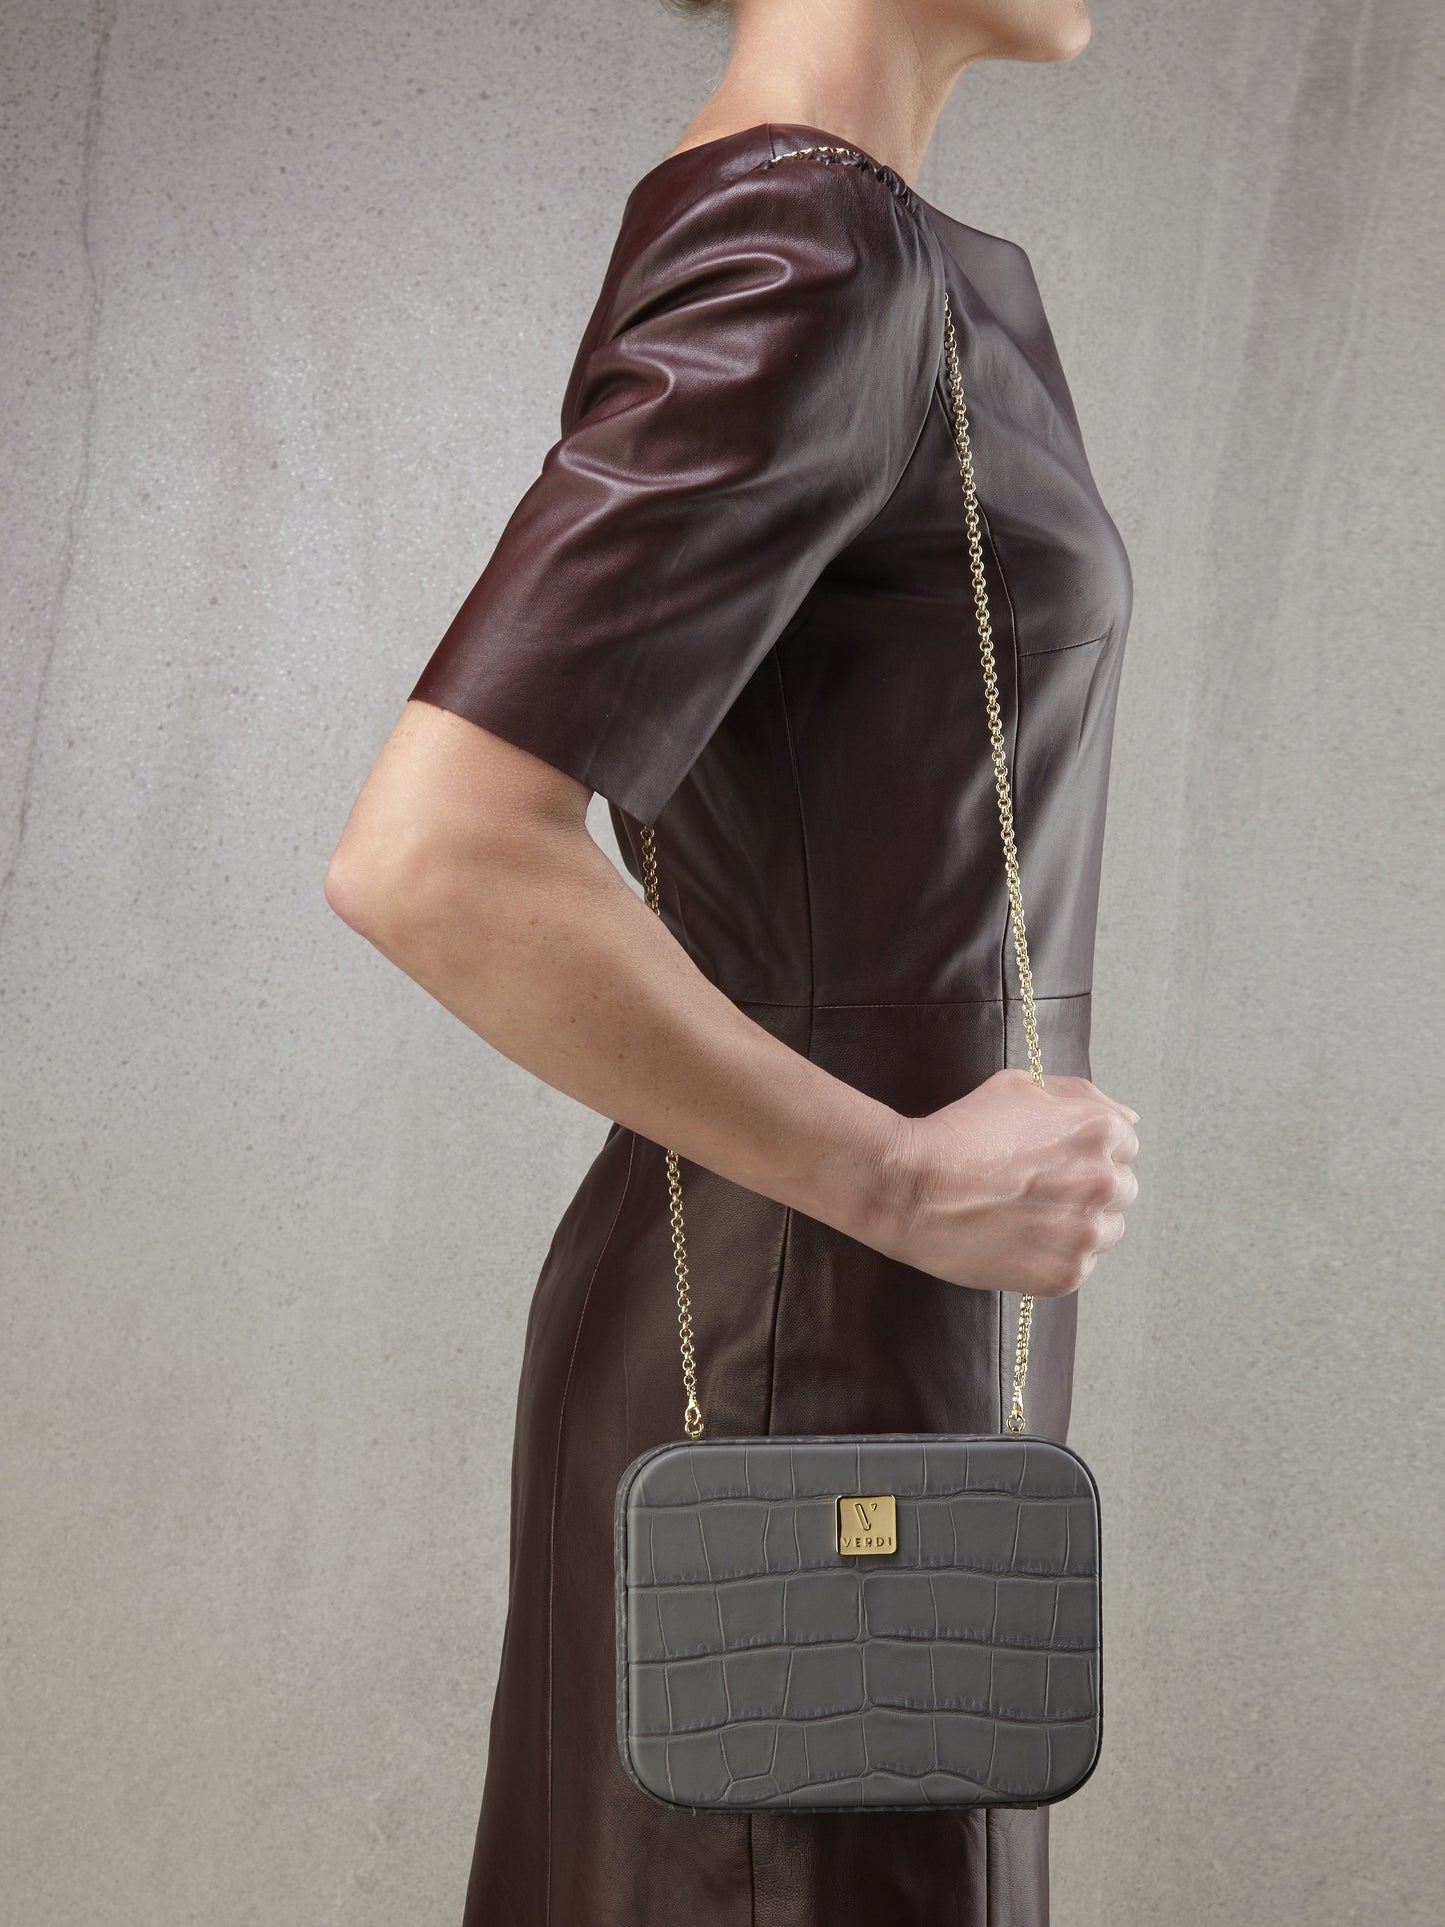 Atelier Verdi grey crocodile print leather clutch bag worn over the shoulder by model